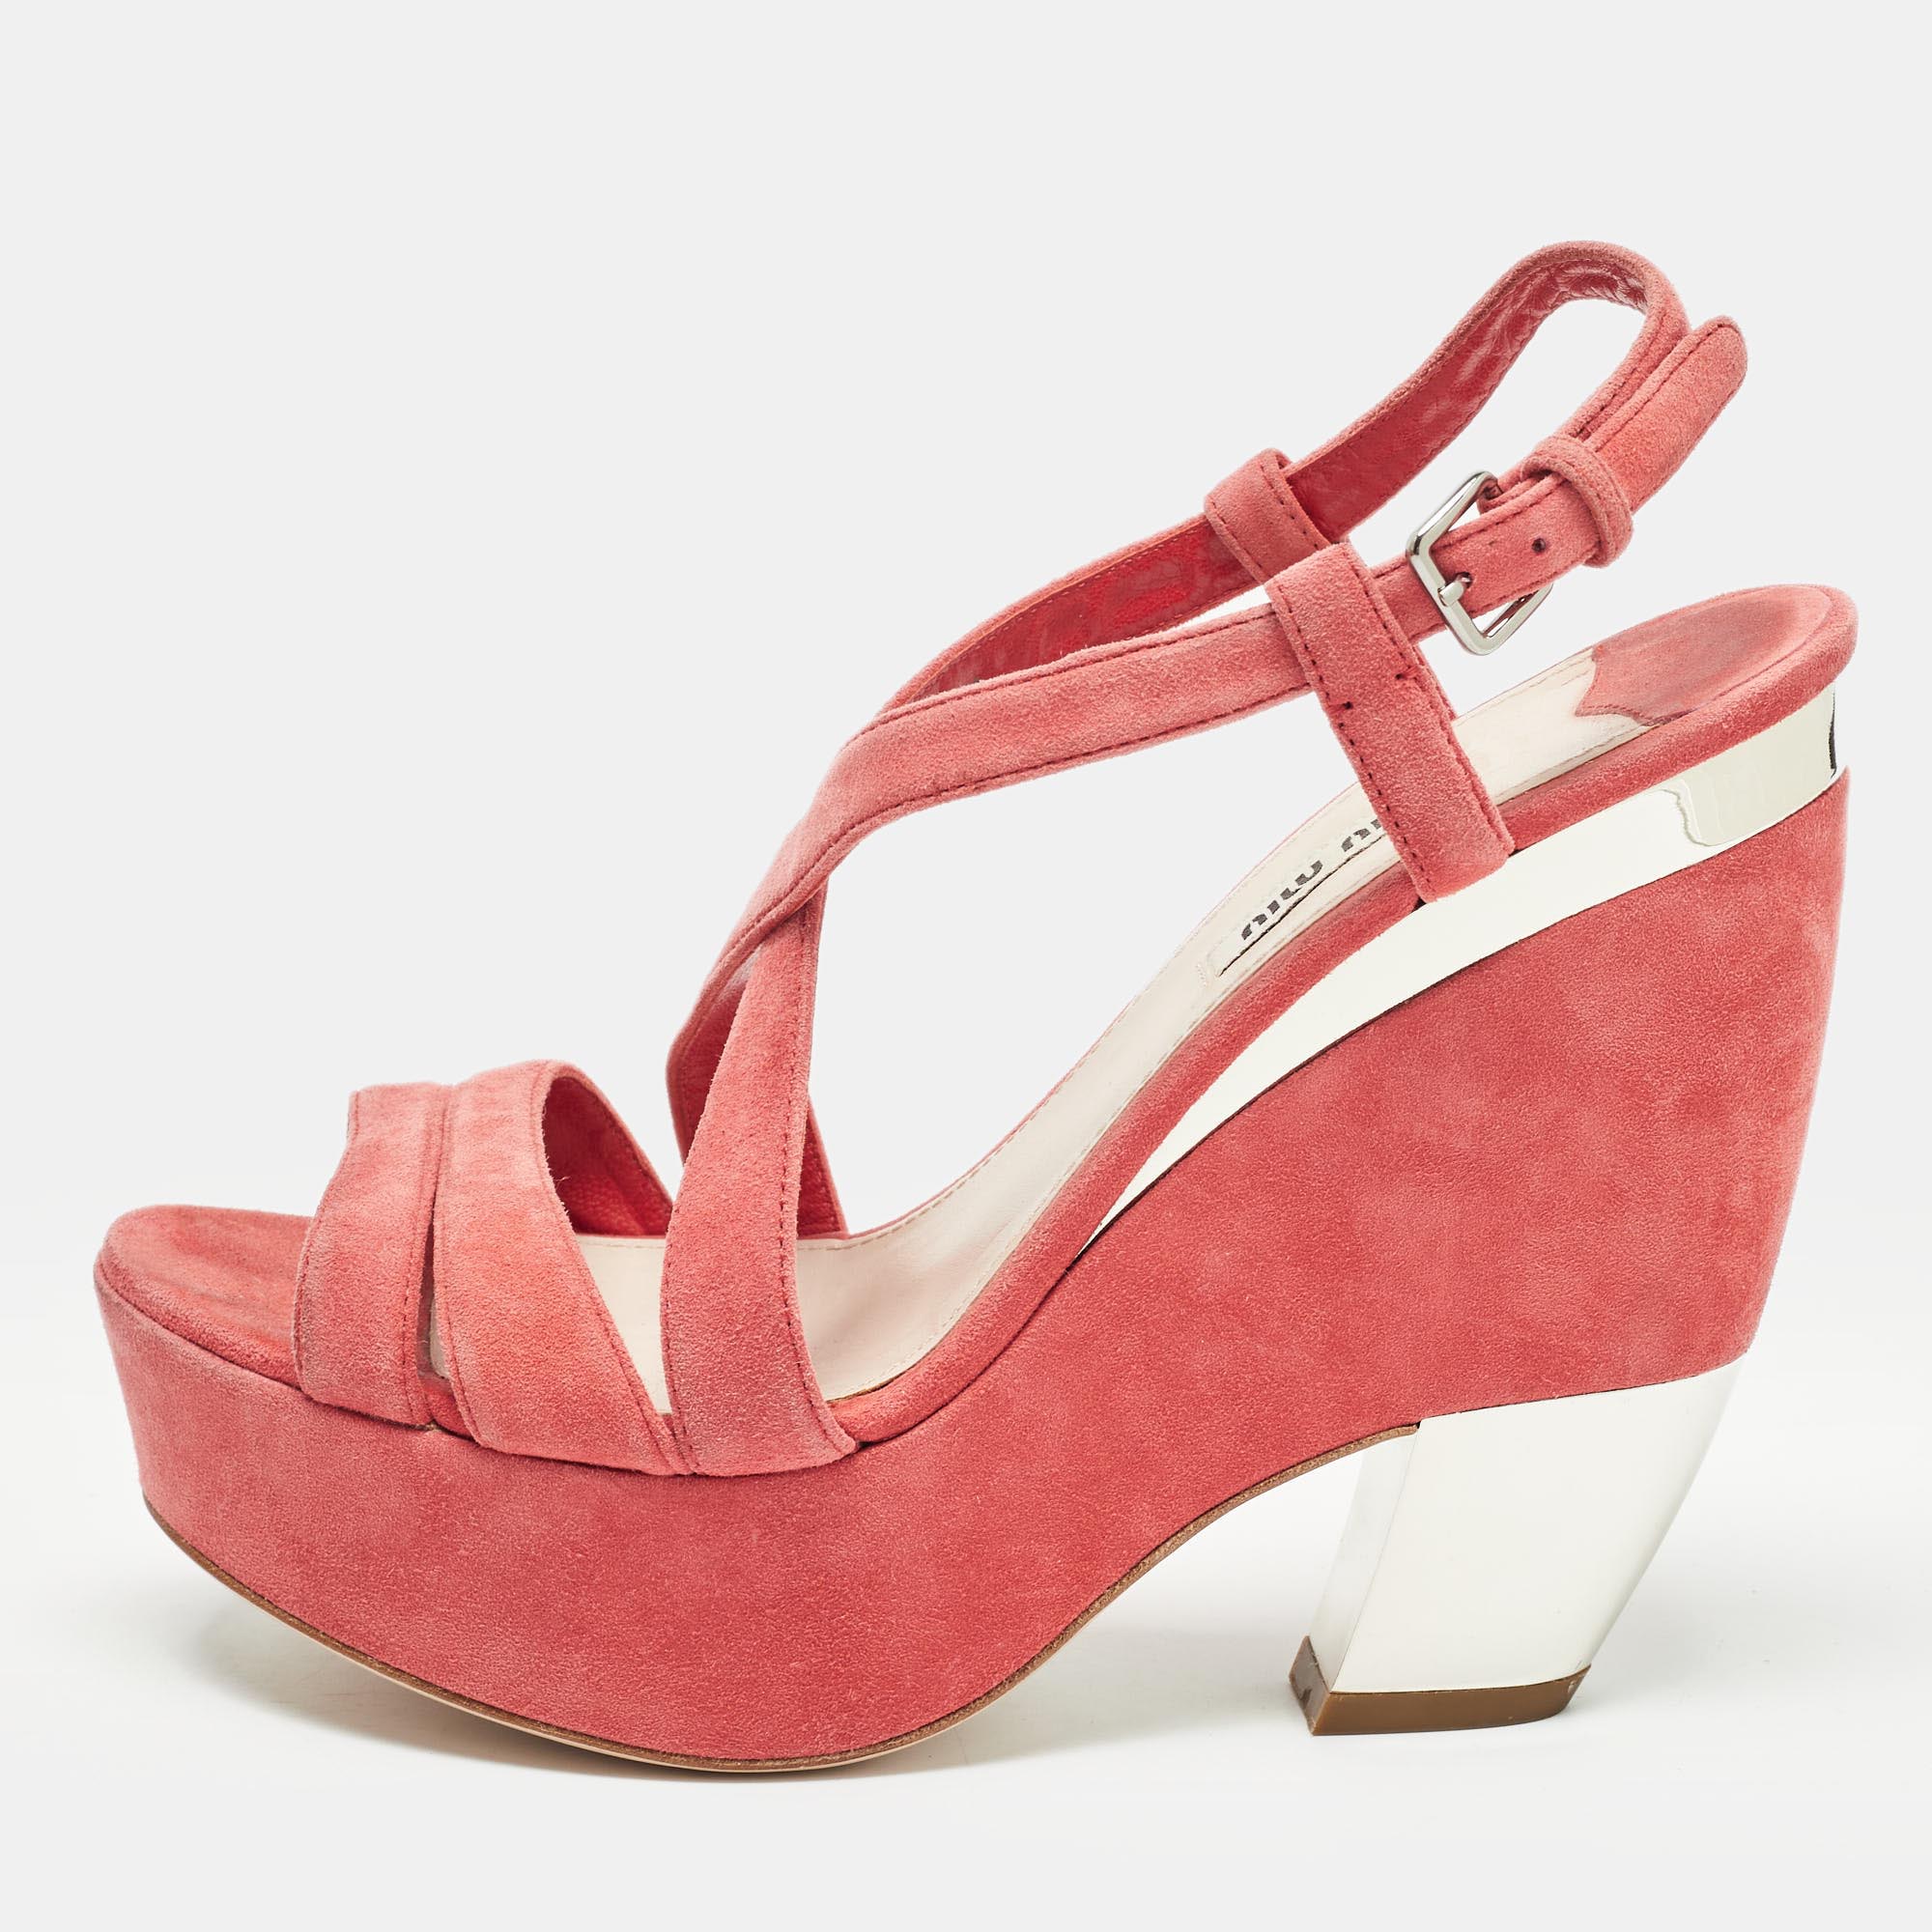 Miu miu pink suede platform slingback sandals size 38